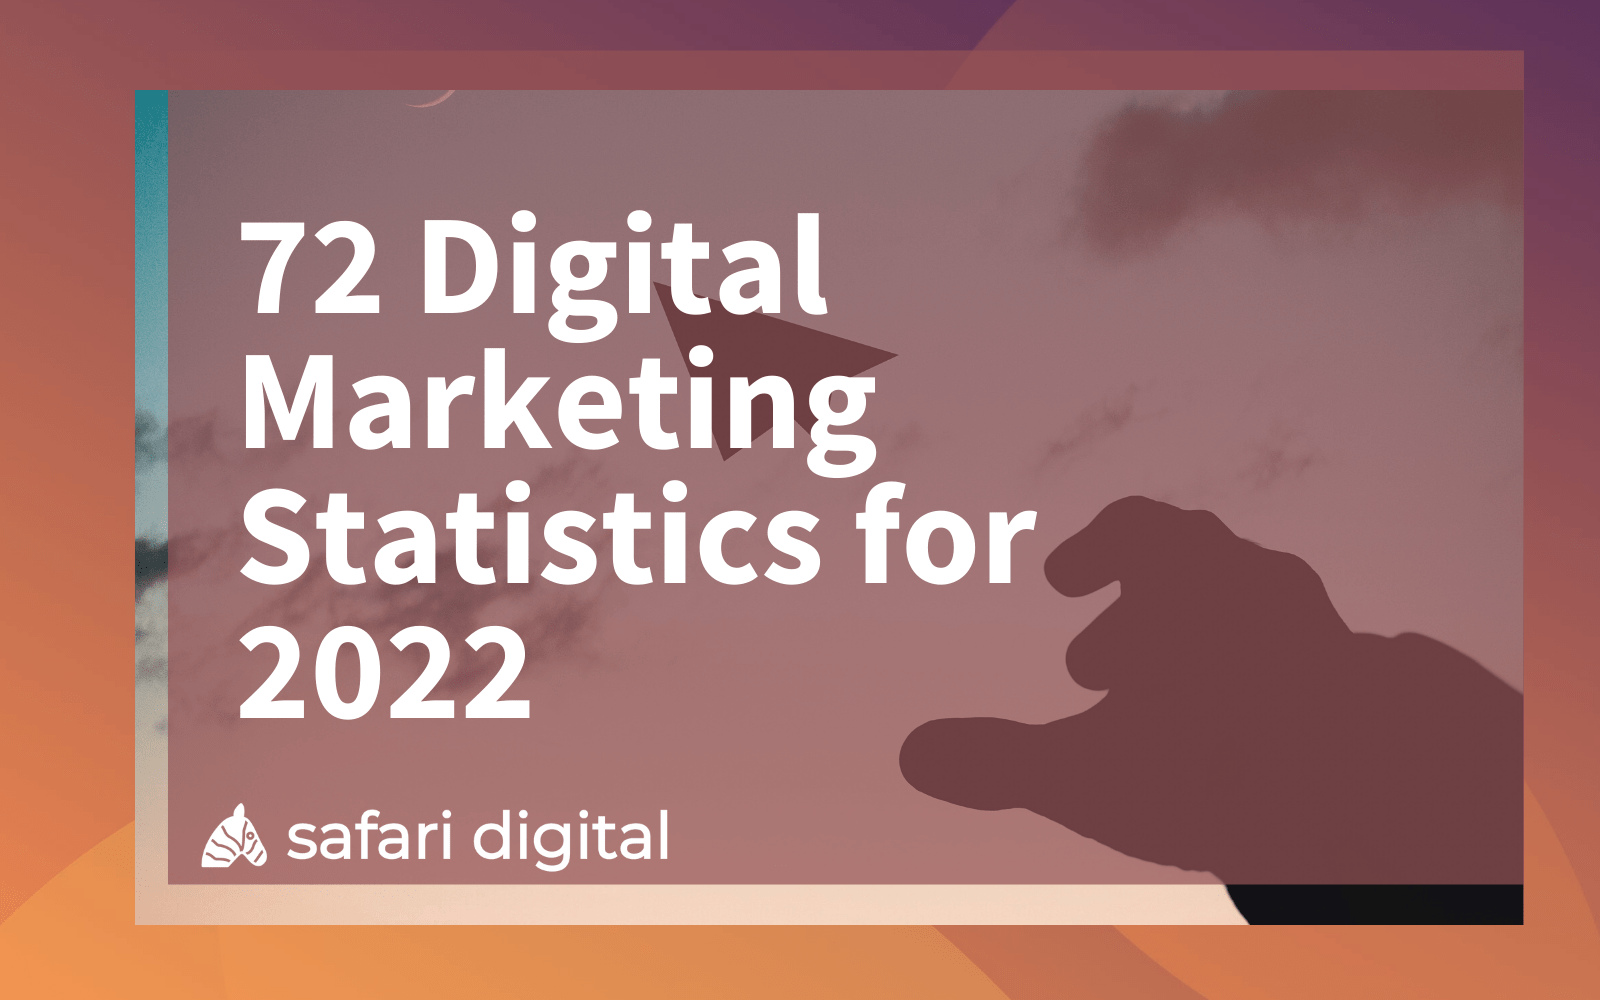 digital marketing statistics cover image